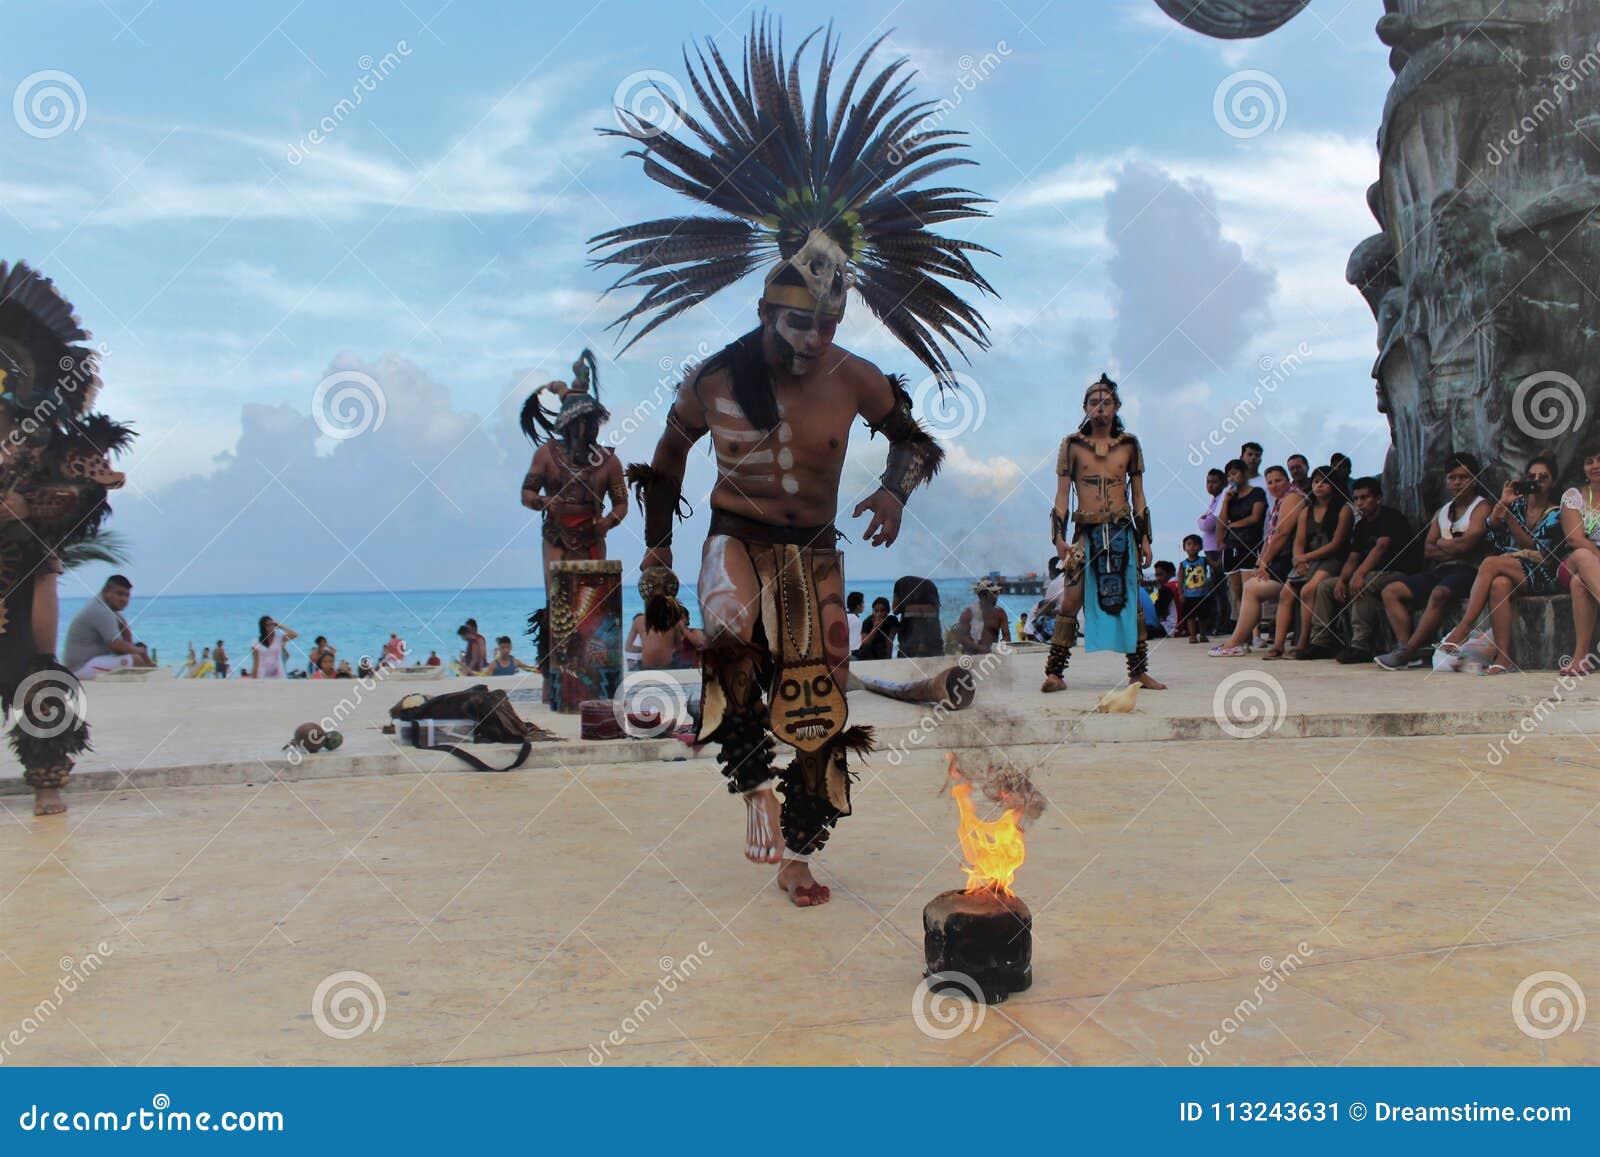 dancing person that represents the prehispanic culture